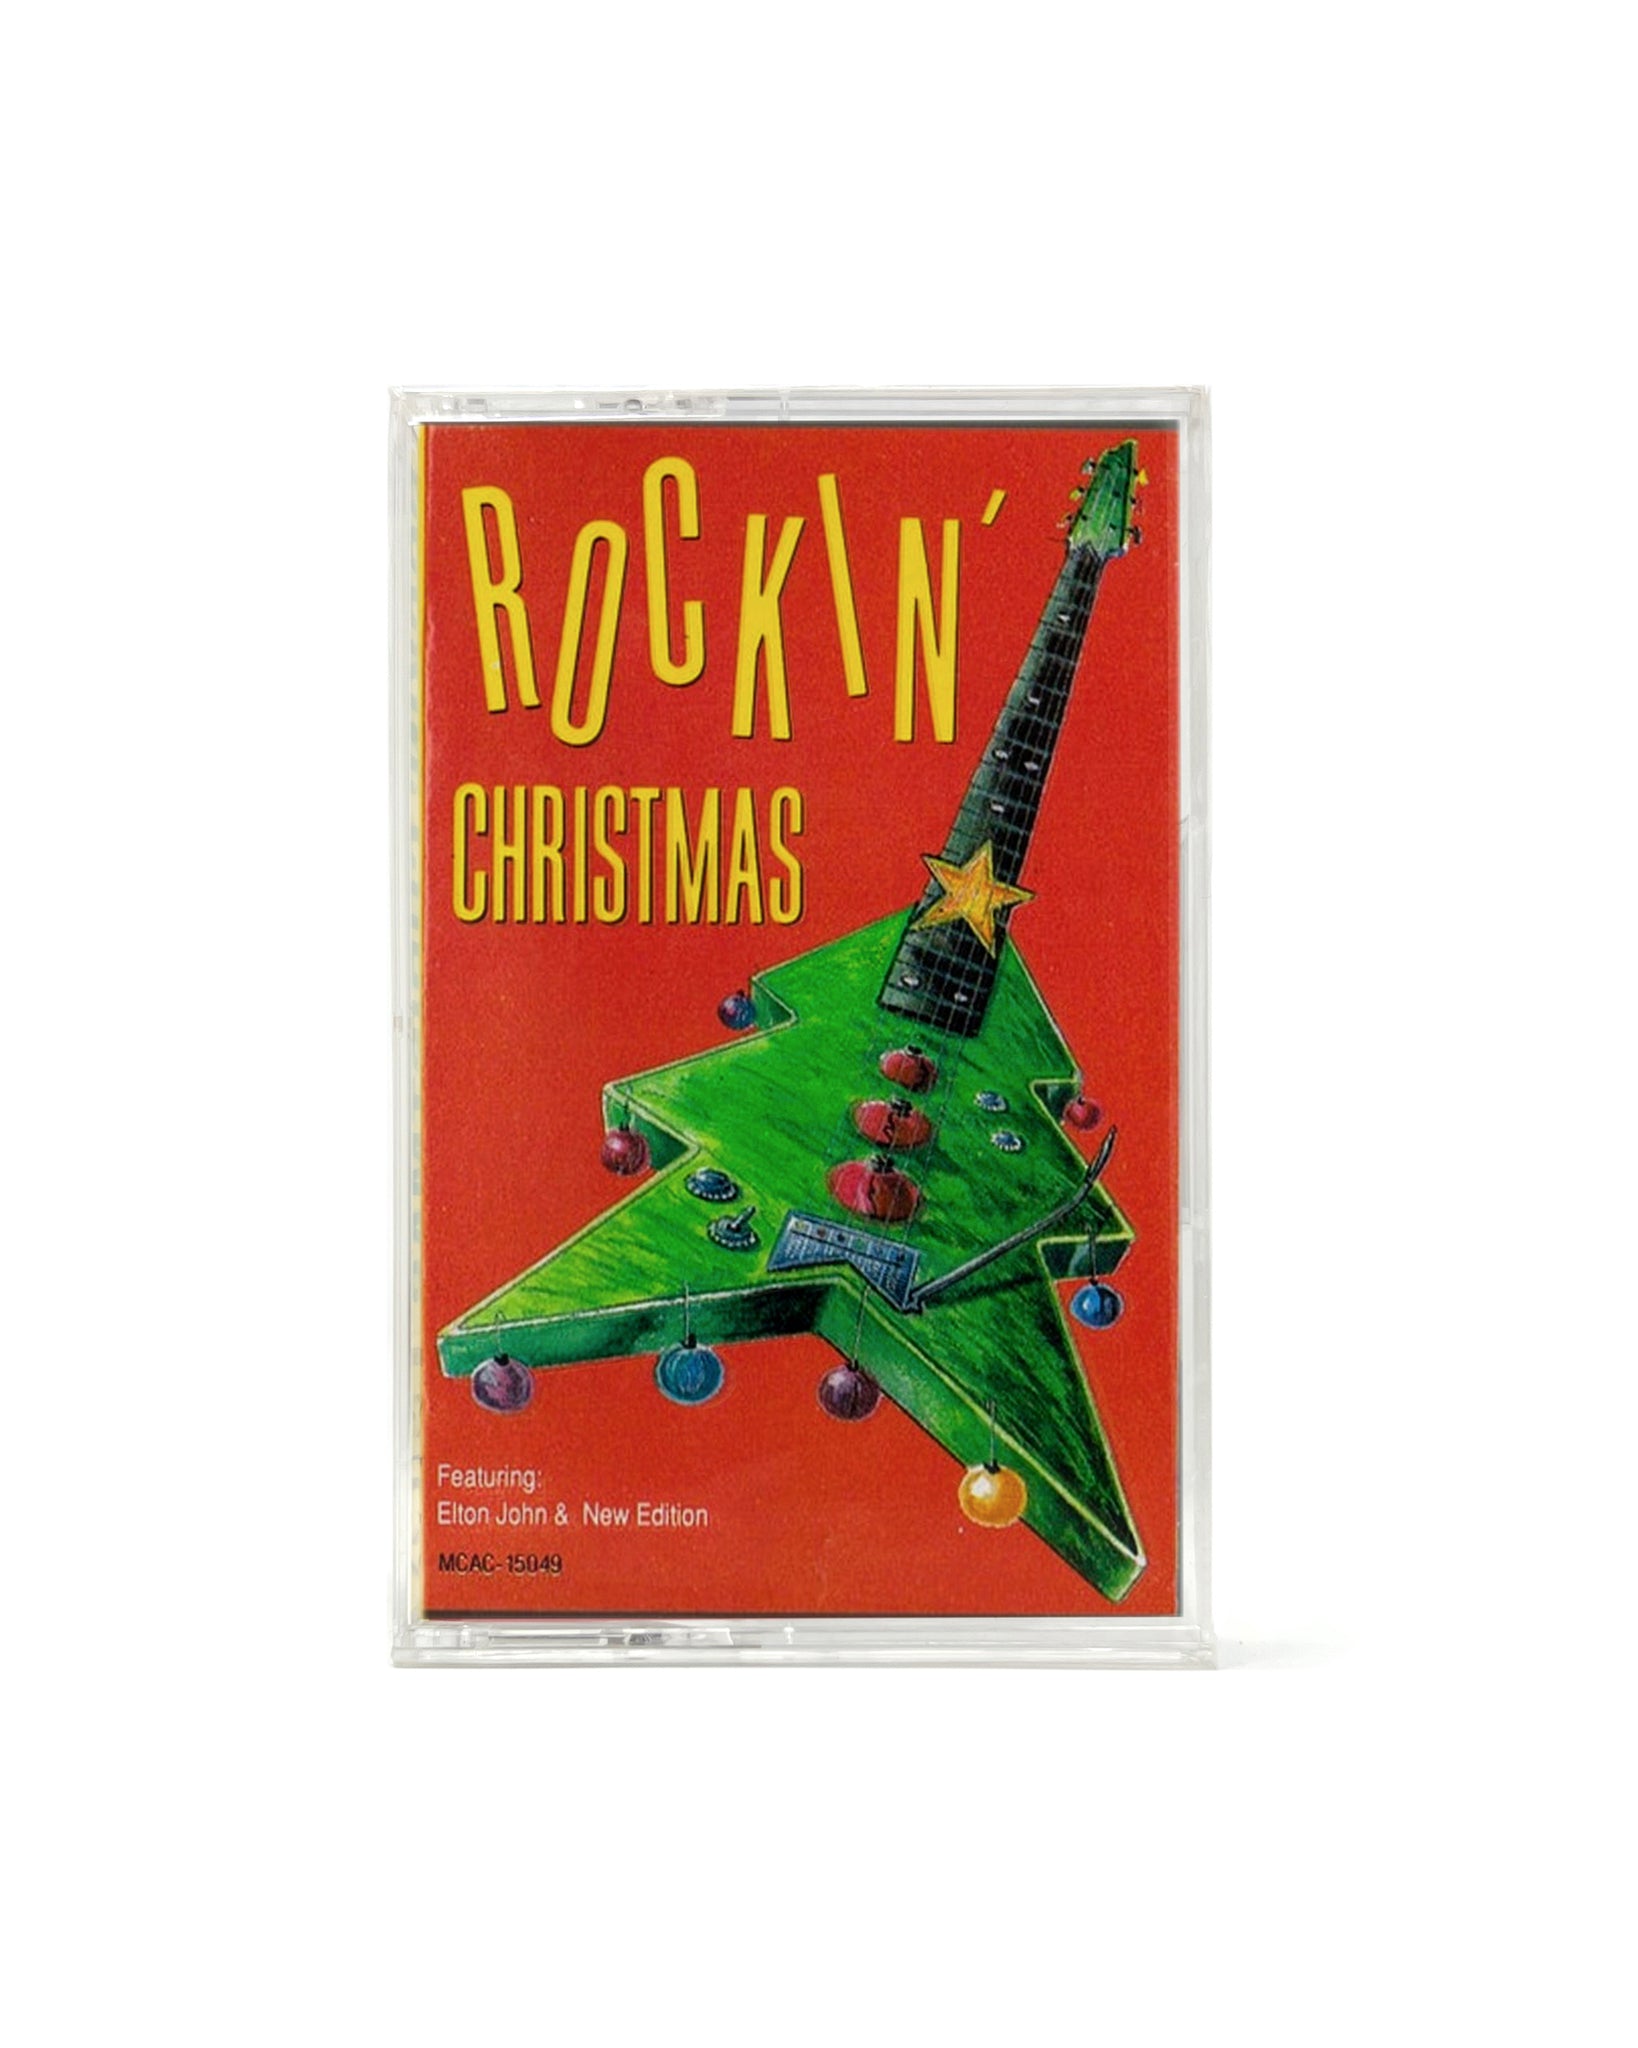 Vintage Holiday Cassette Tape: Elton John & New Edition "Rockin' Christmas"